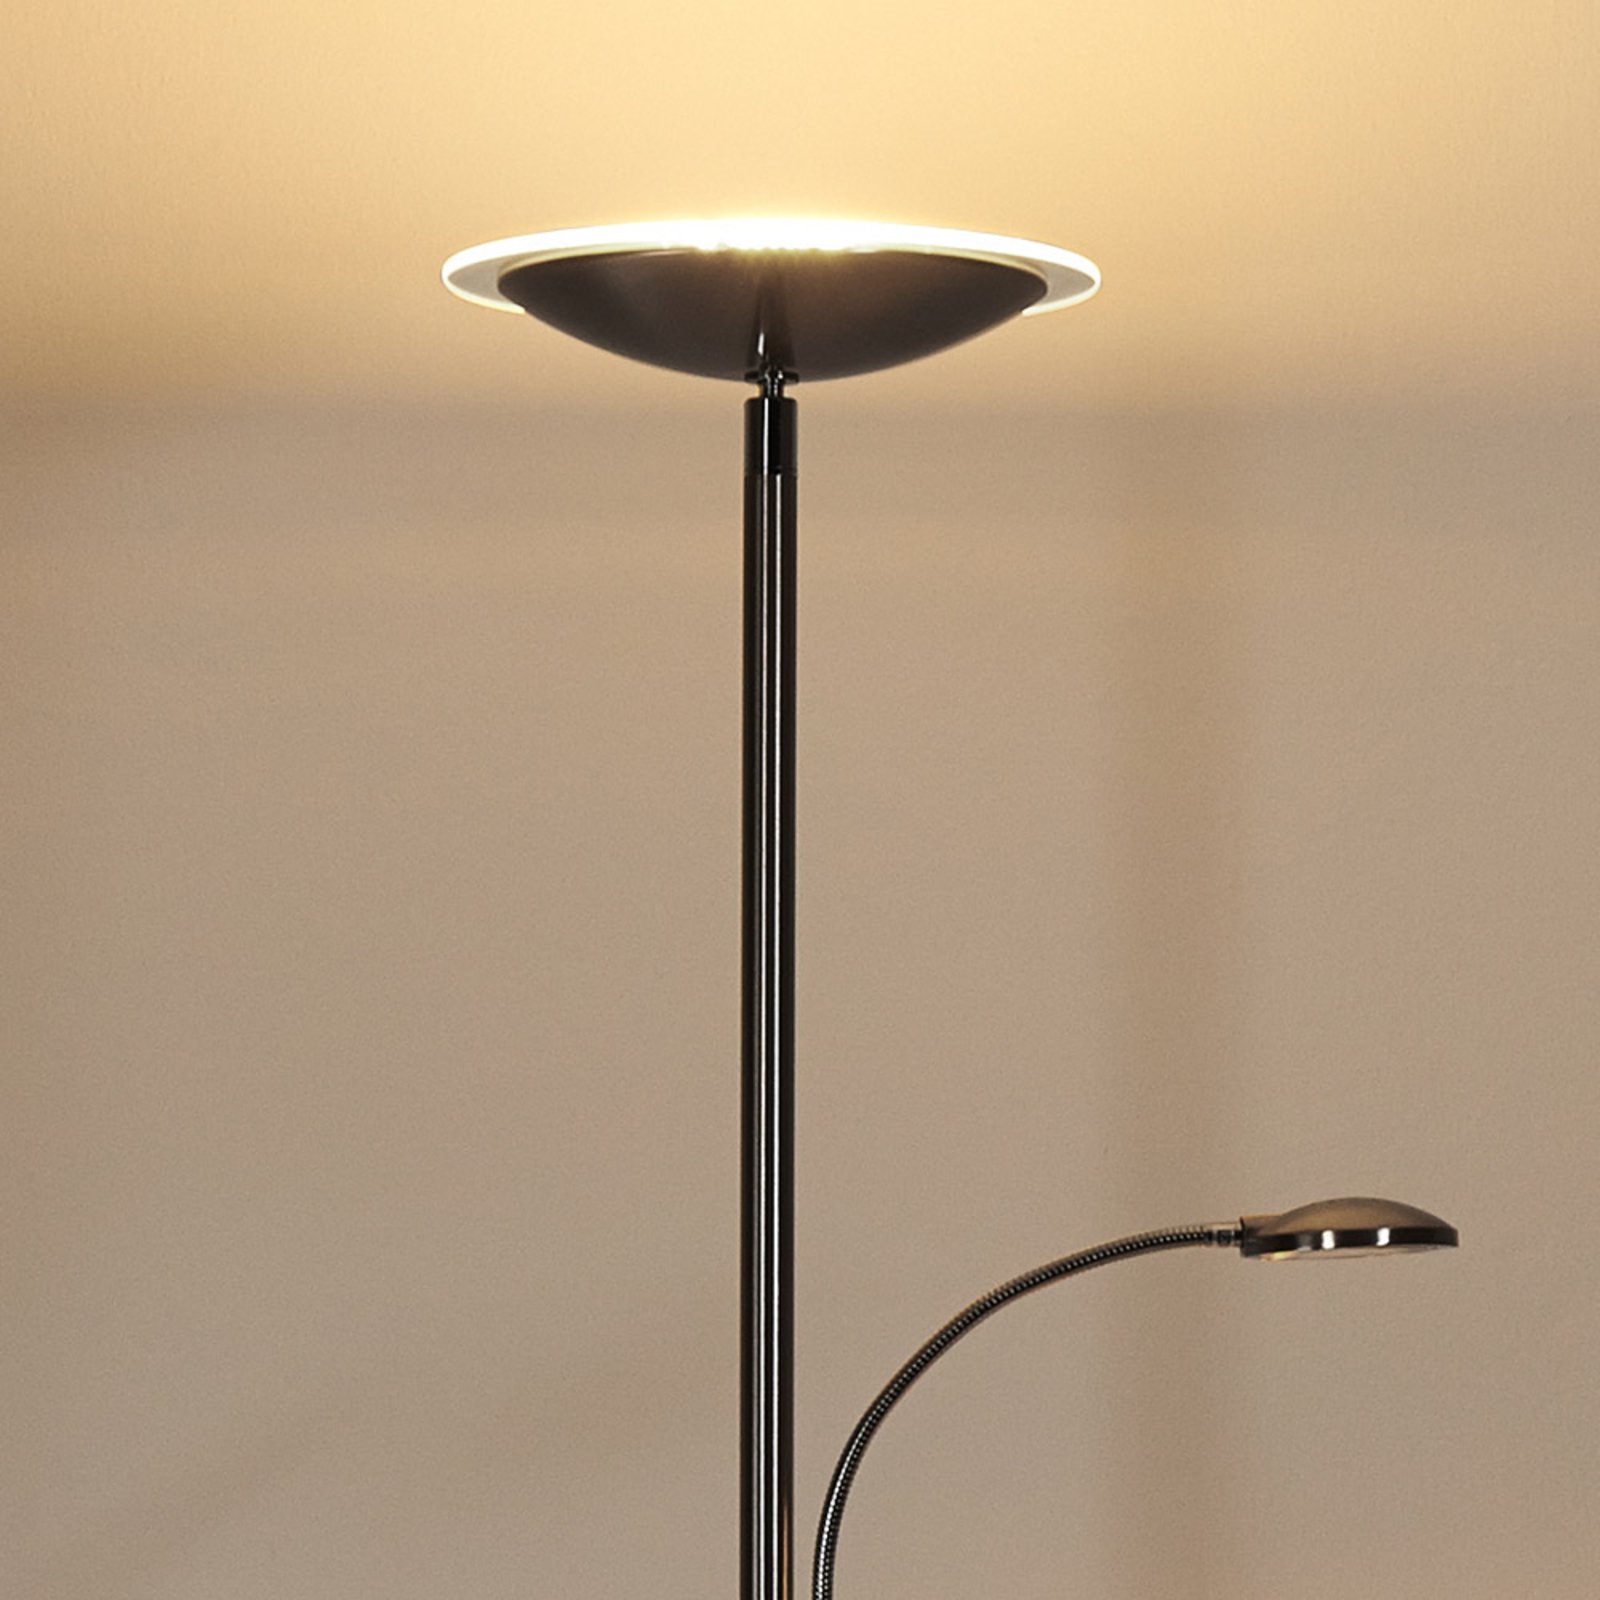 Malea lampadaire indirect LED avec liseuse, nickel